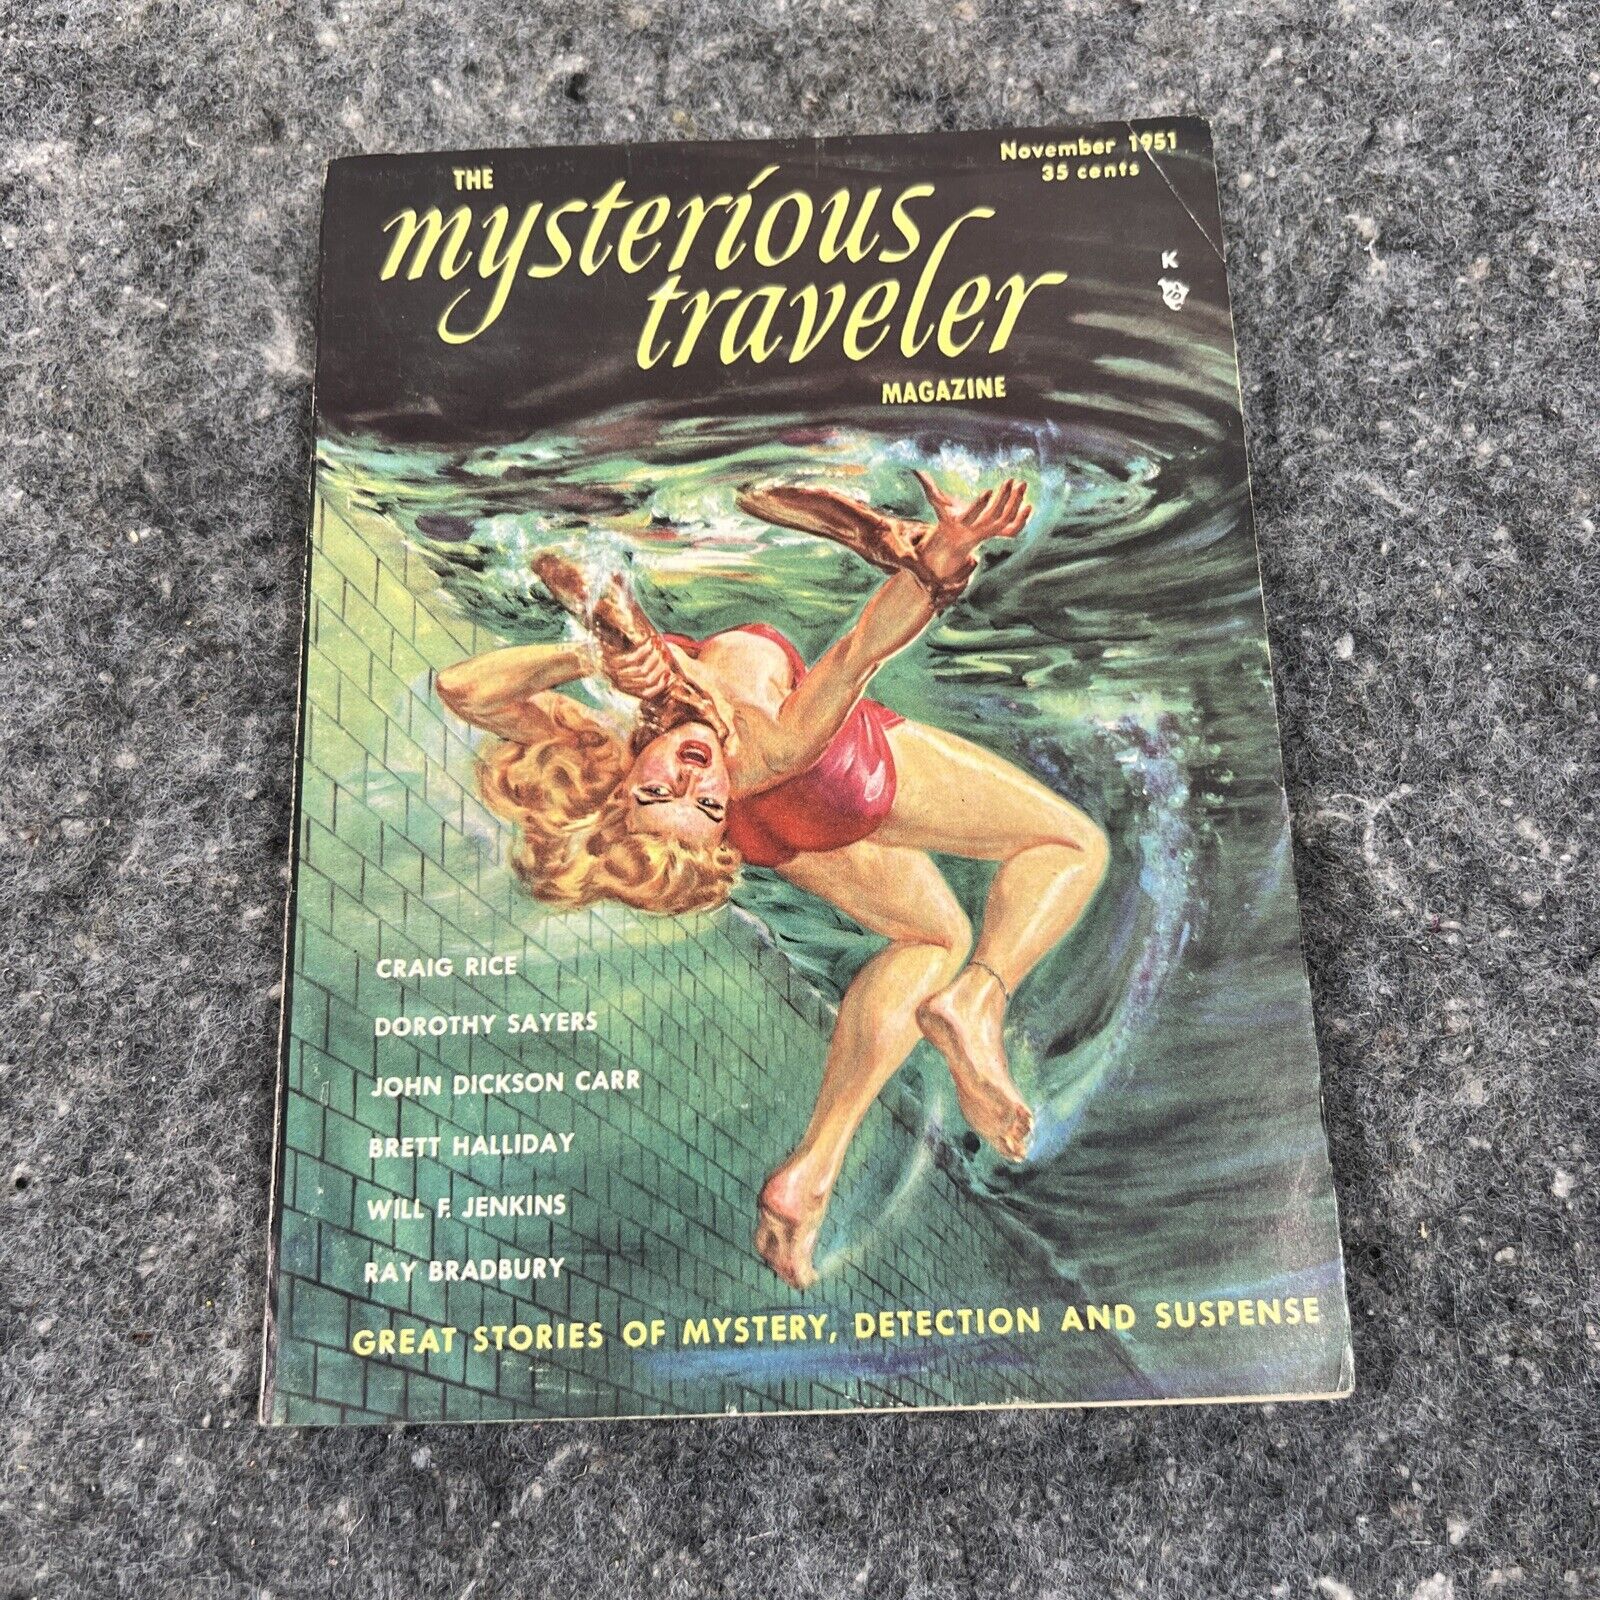 Mysterious Traveler Vol. 1, No. 1, Nov 1951 - Craig Rice, Dorothy Sayers..